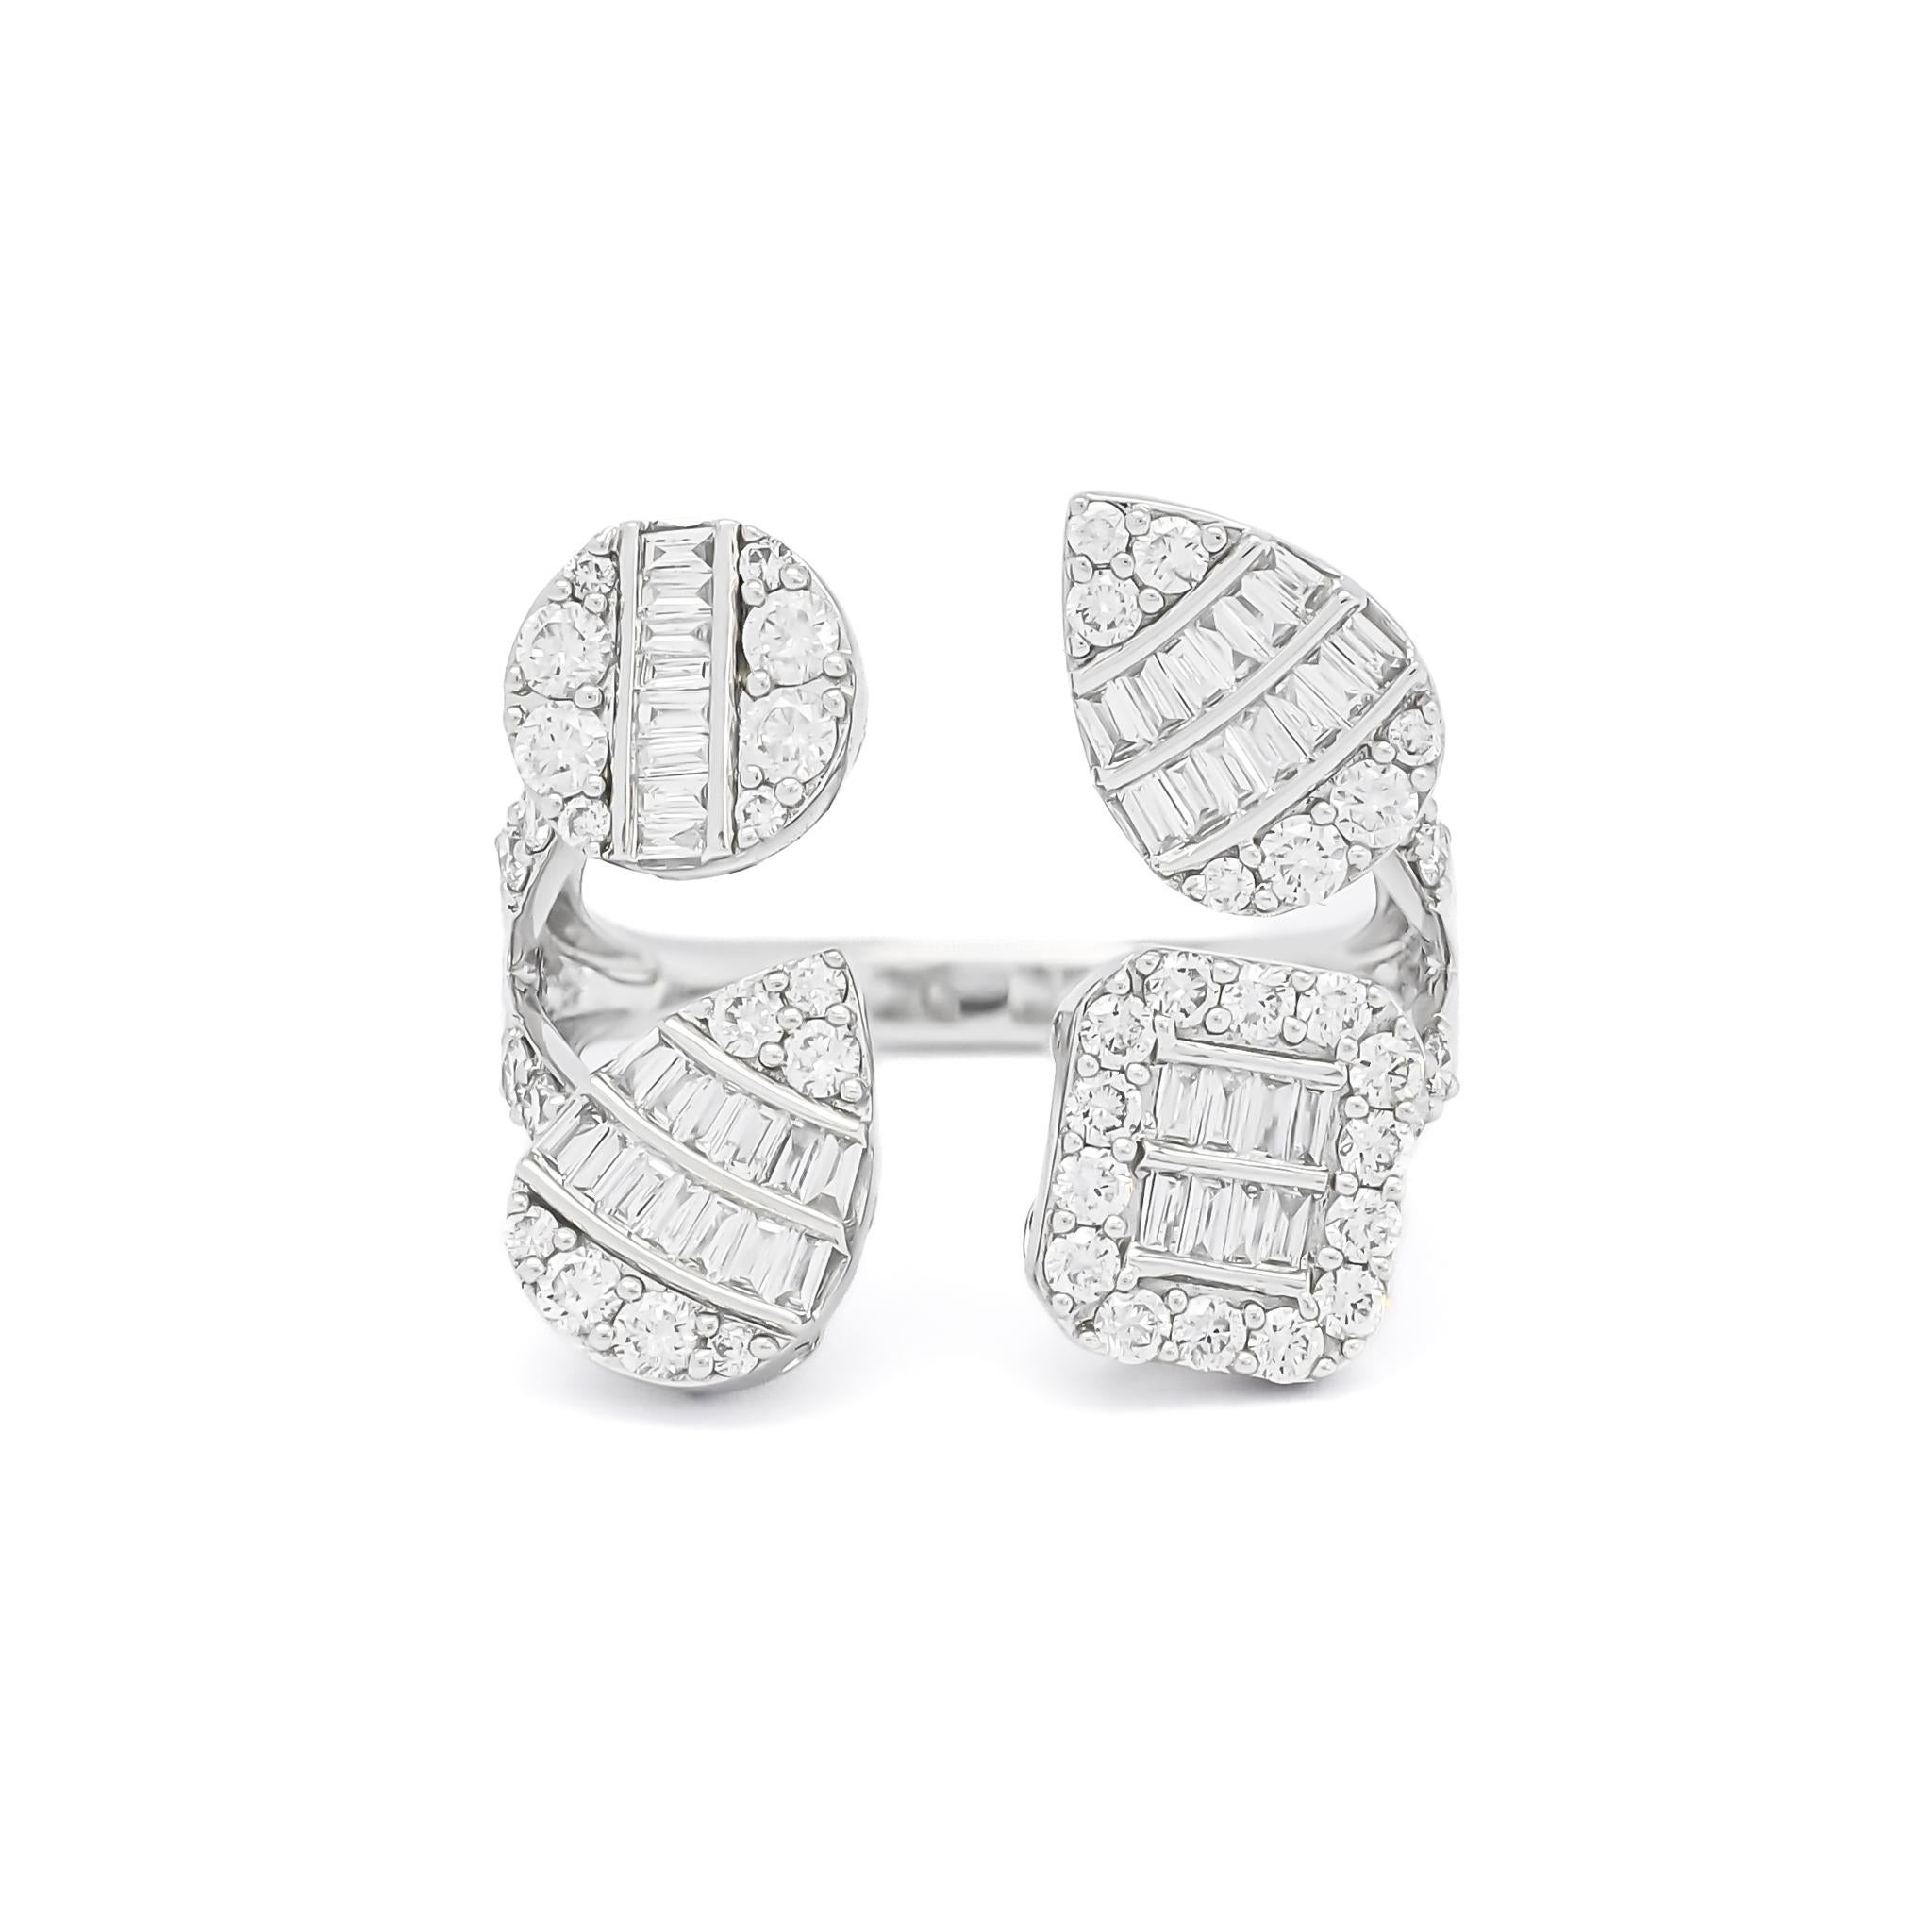 Natural Diamond Ring 1.23 cts 18 Karat White Gold High Fashion Statement Ring For Sale 2